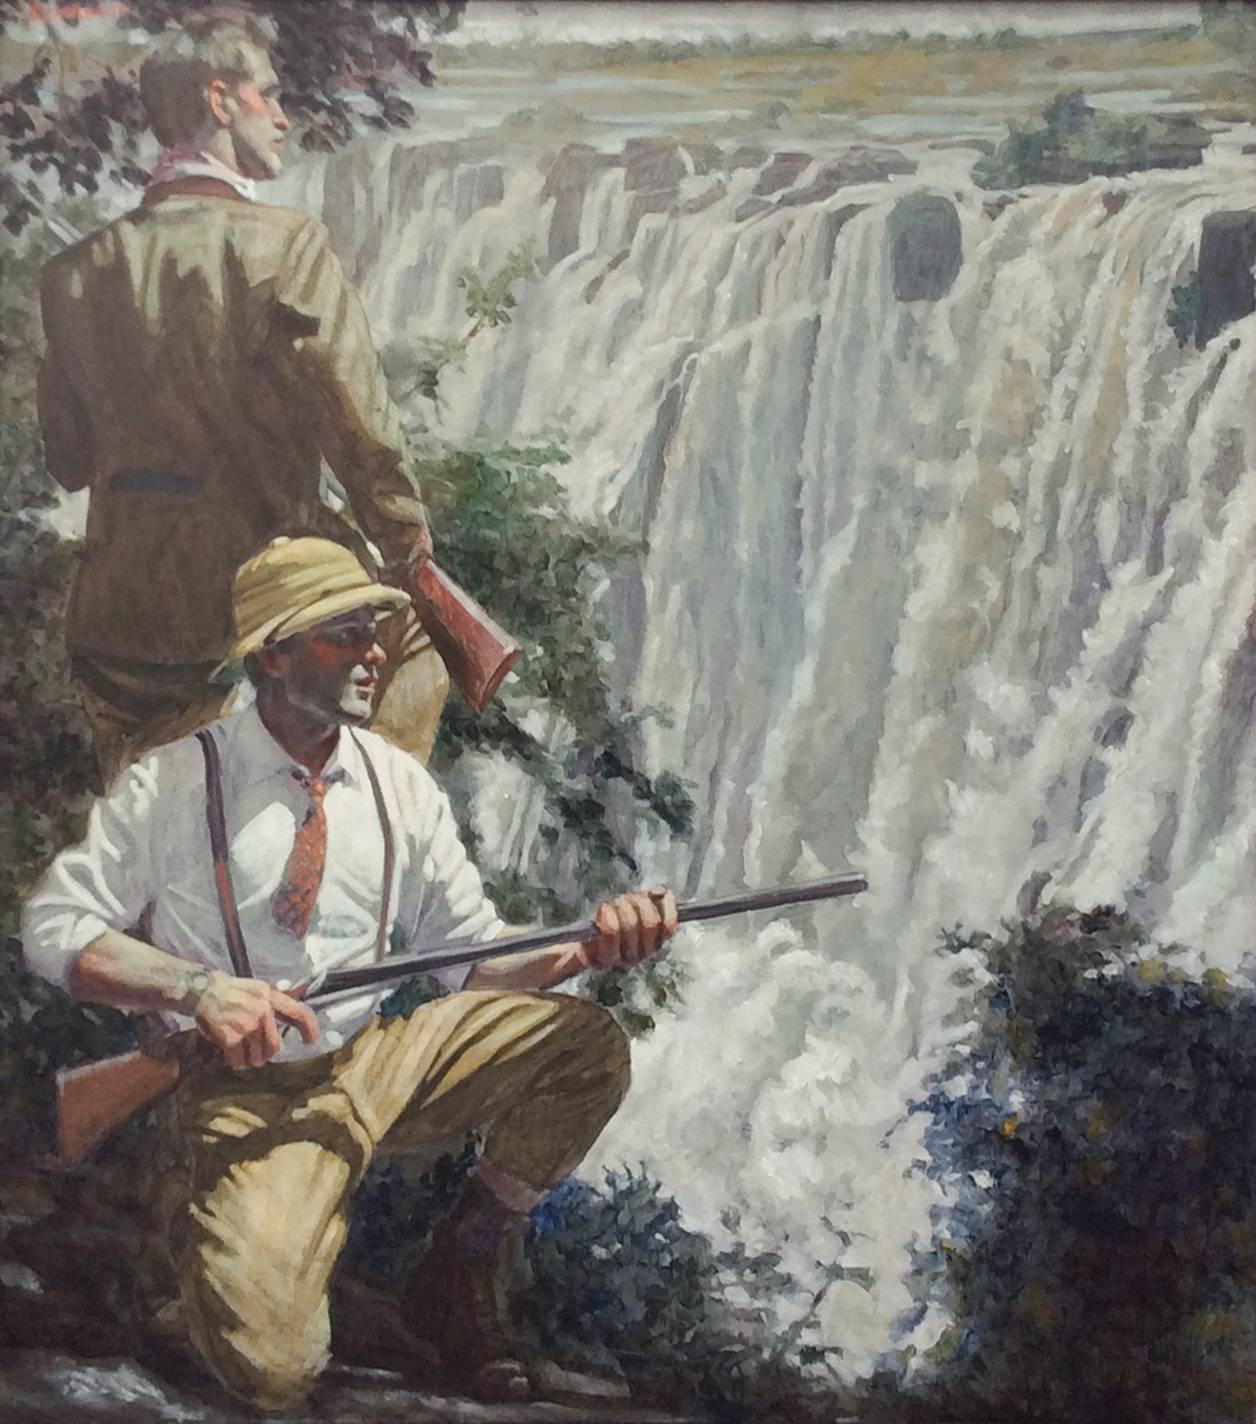 Waterfall (Figurative Oil Painting of Two Men Hunting and a Waterfall) - Black Figurative Painting by Mark Beard